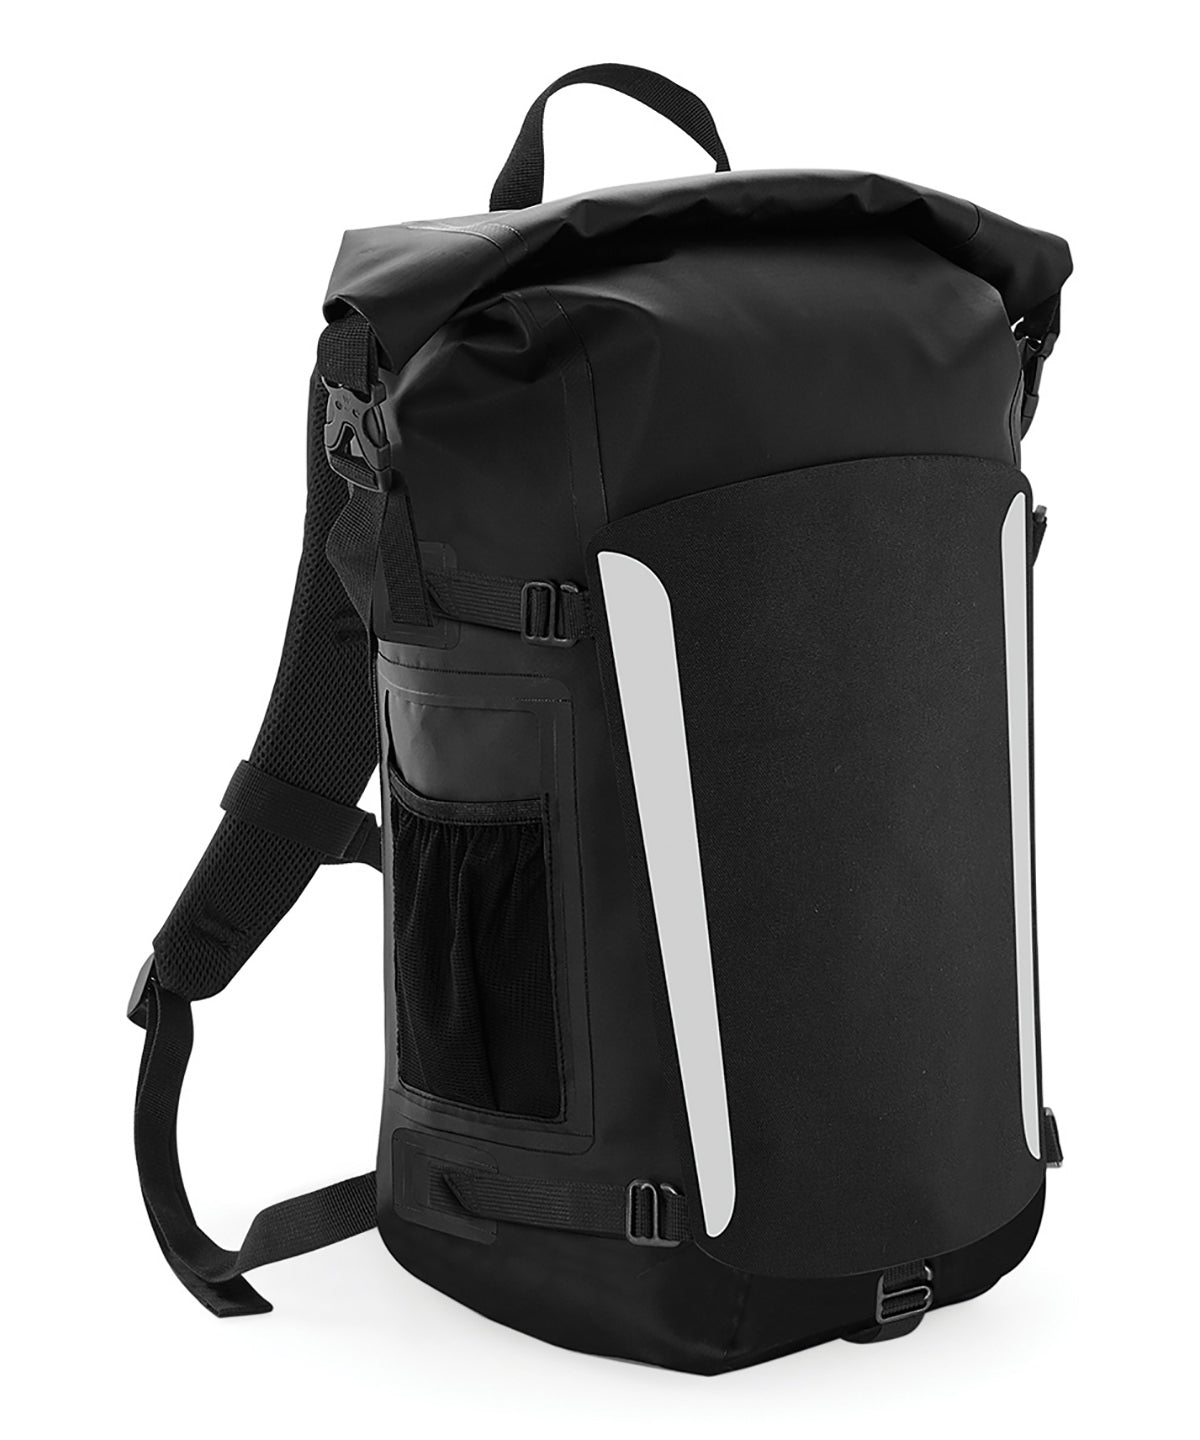 Töskur - SLX® 25 Litre Waterproof Backpack